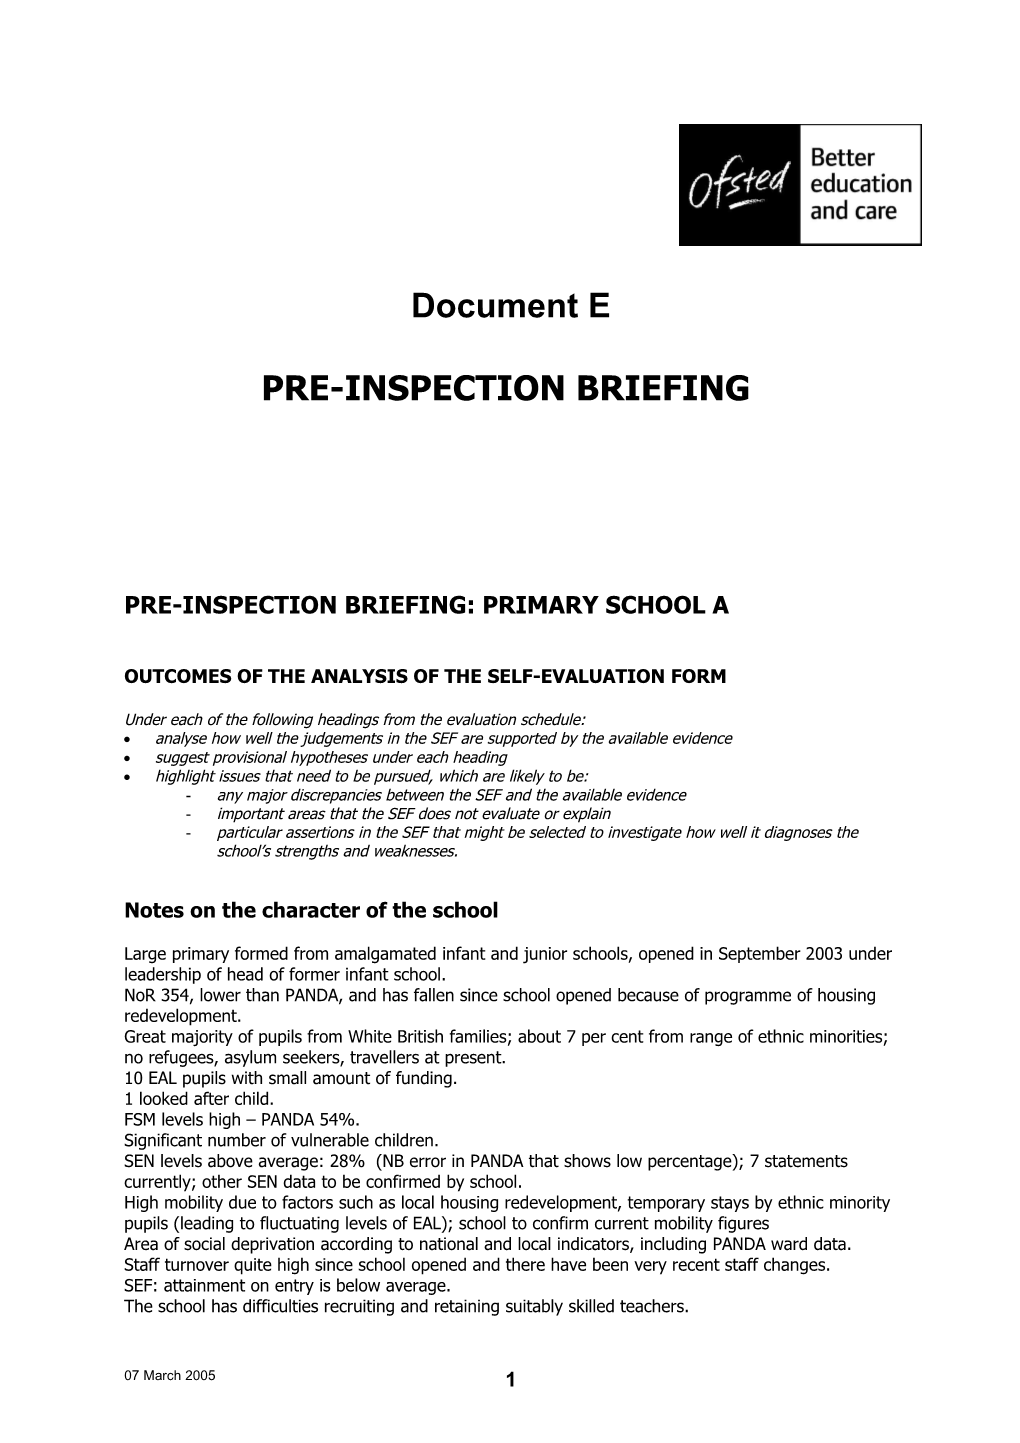 Pre-Inspection Briefing: Primary School A